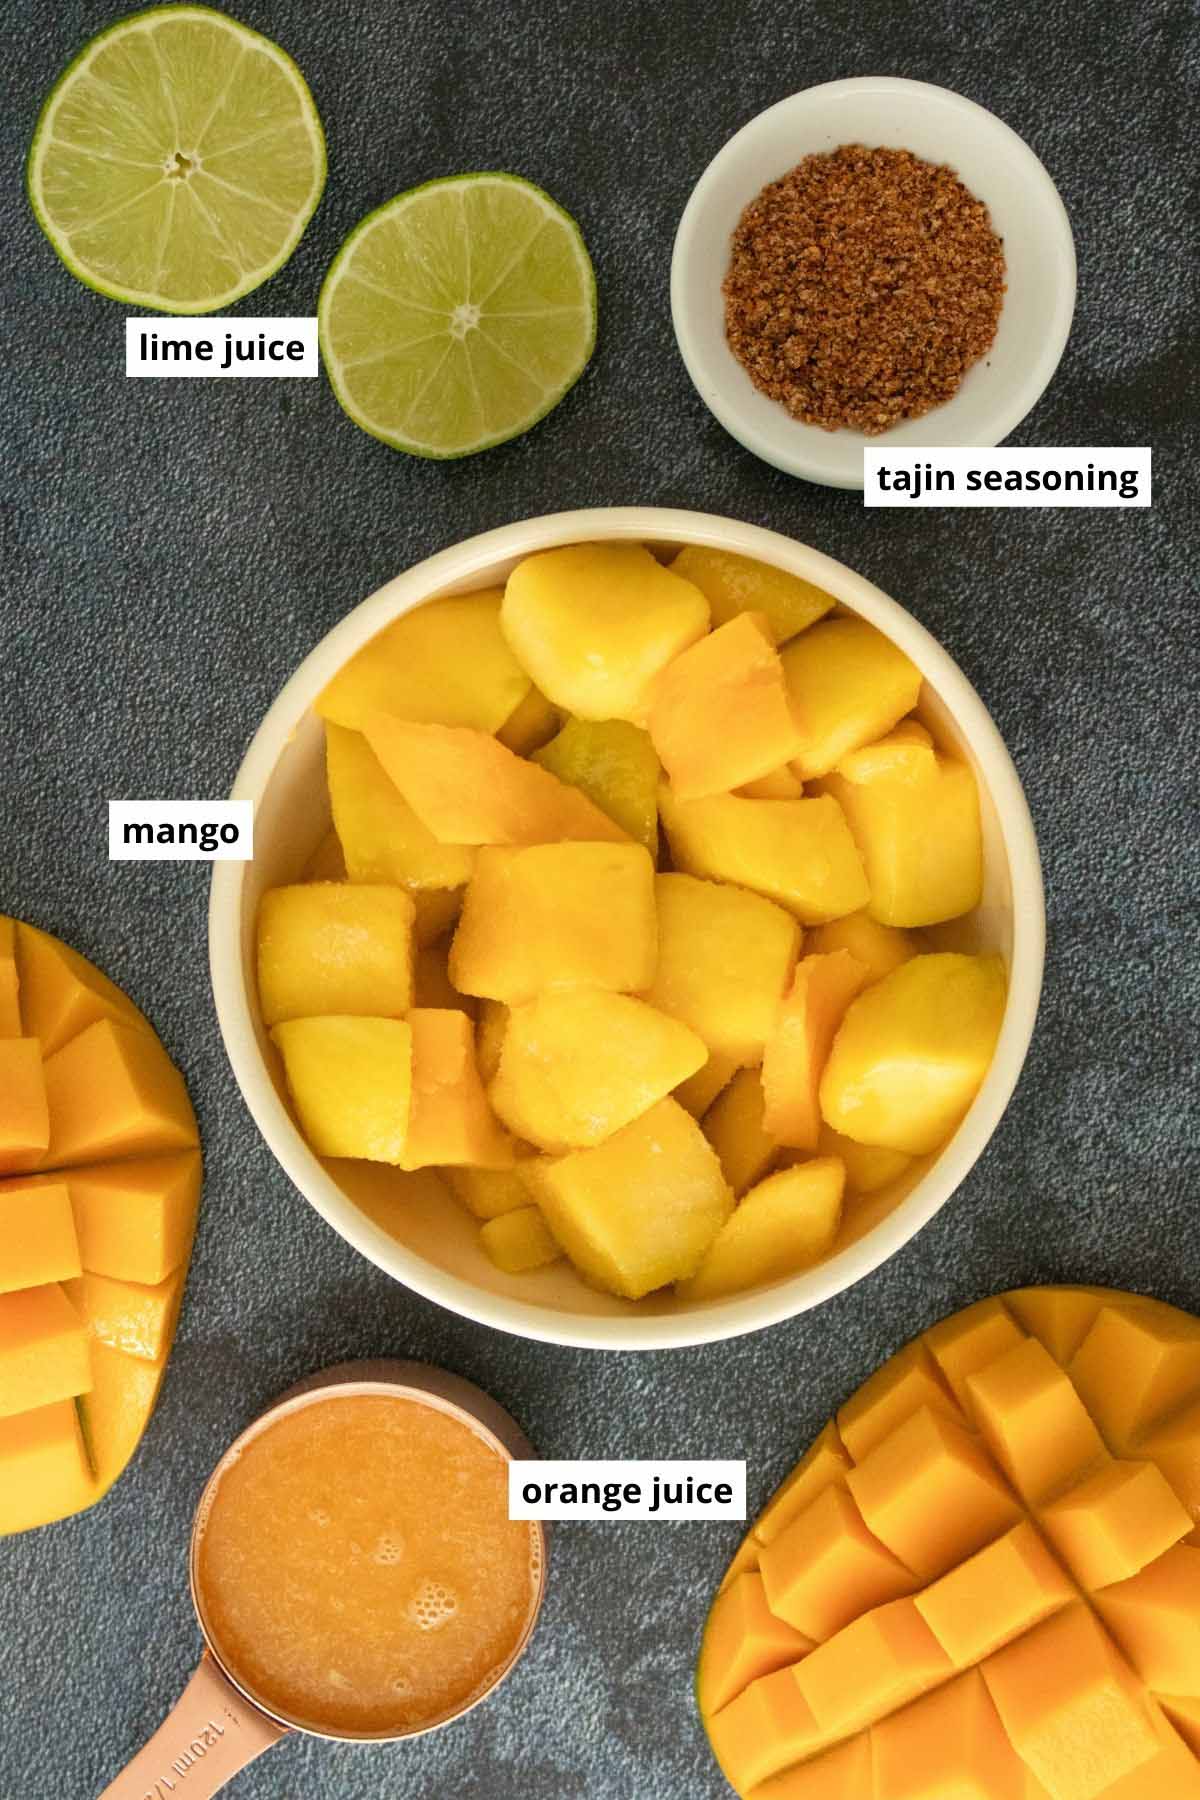 mango, tajin, orange juice, and lime halves on a dark tabletop